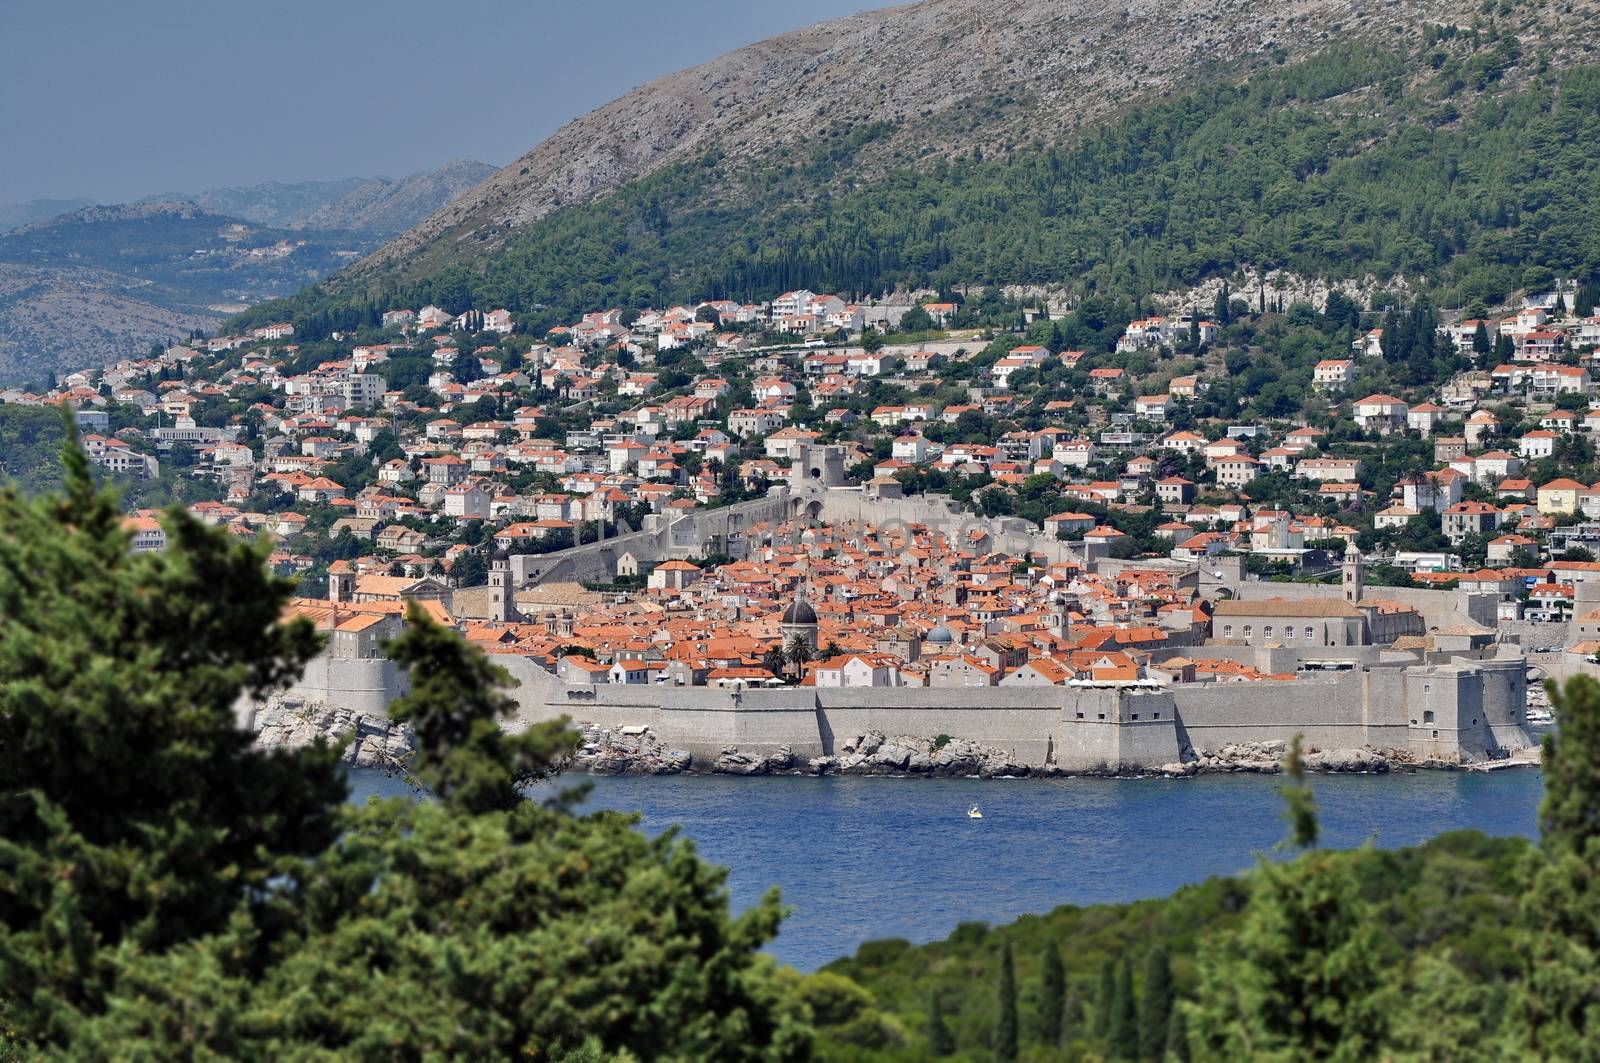 City of Dubrovnik from Lokrum Island